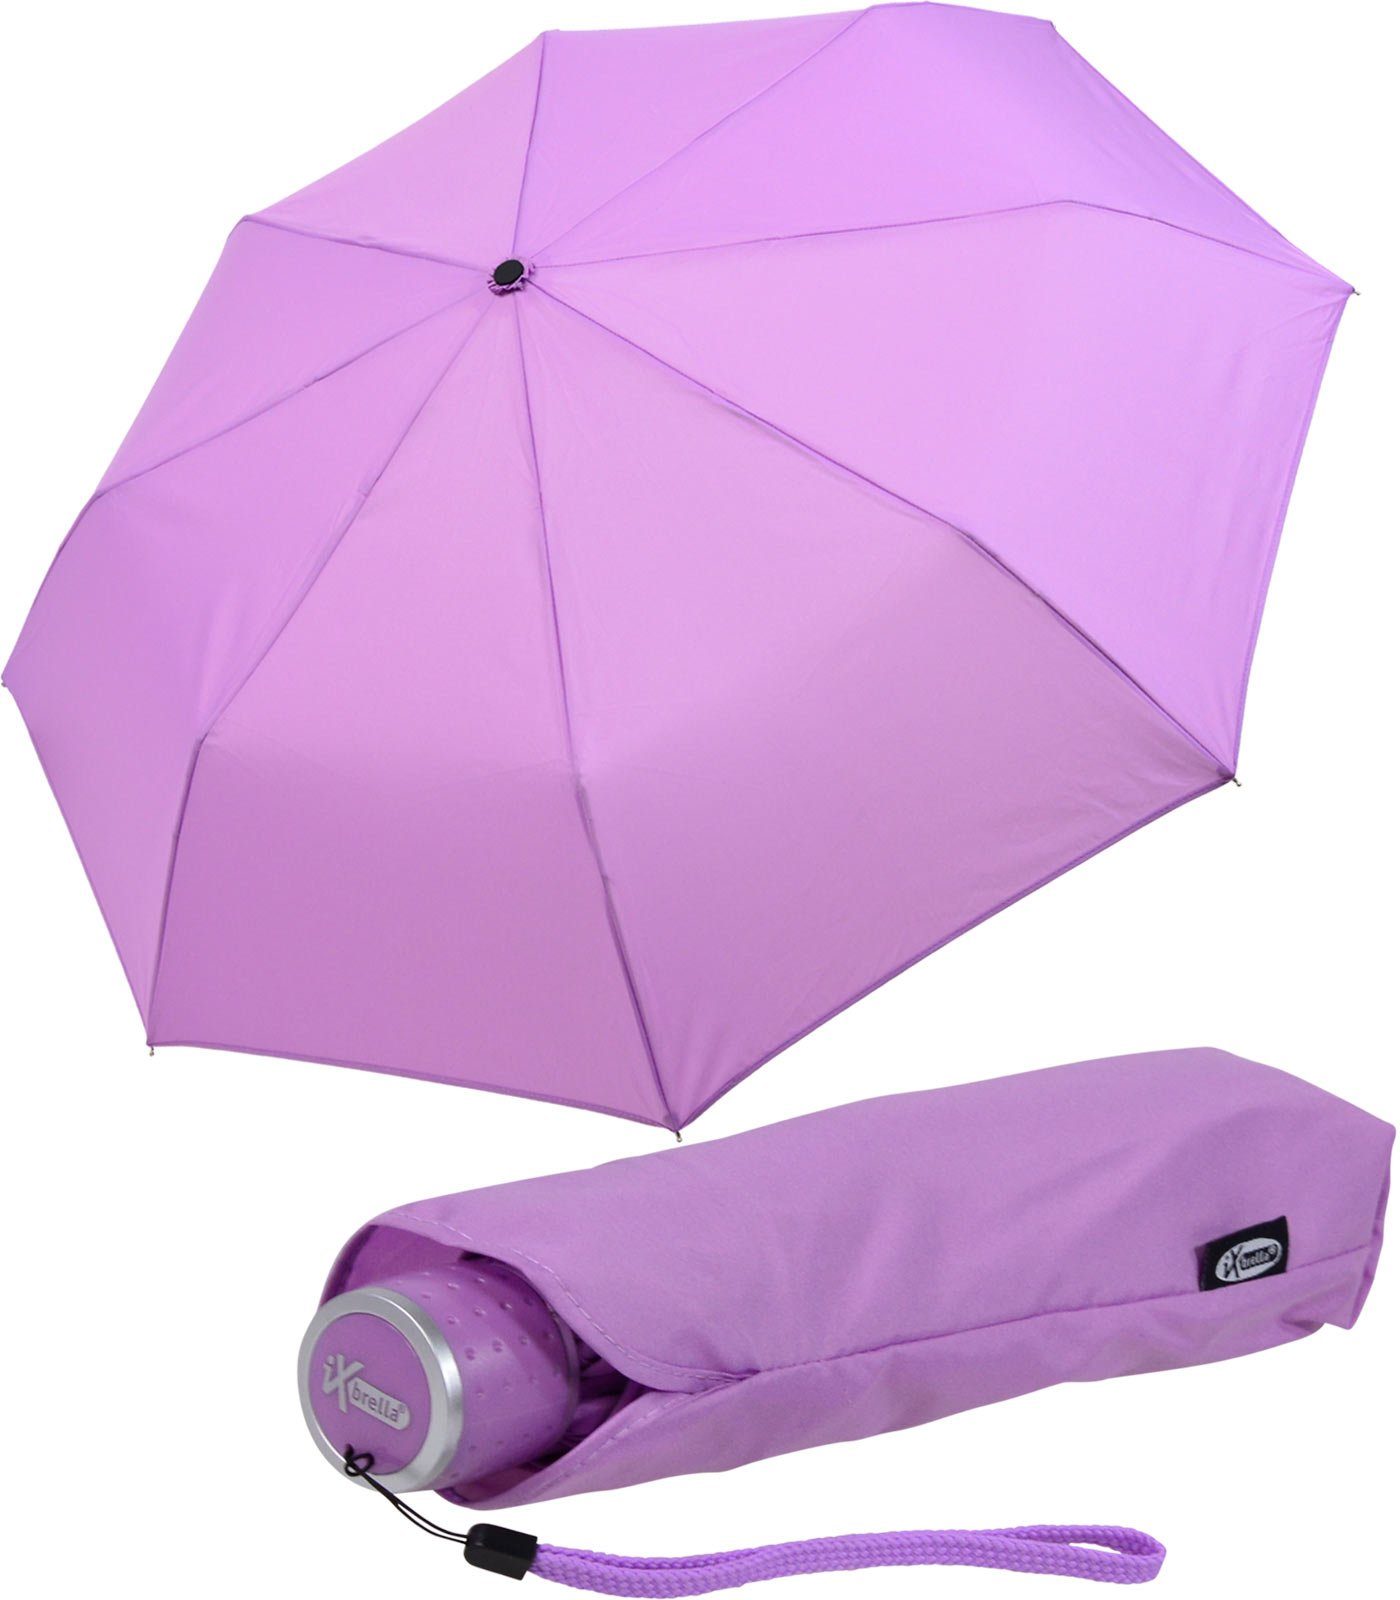 Ultra extra leicht, hell-lila iX-brella dezent mit Taschenregenschirm Light Dach - Mini großem -